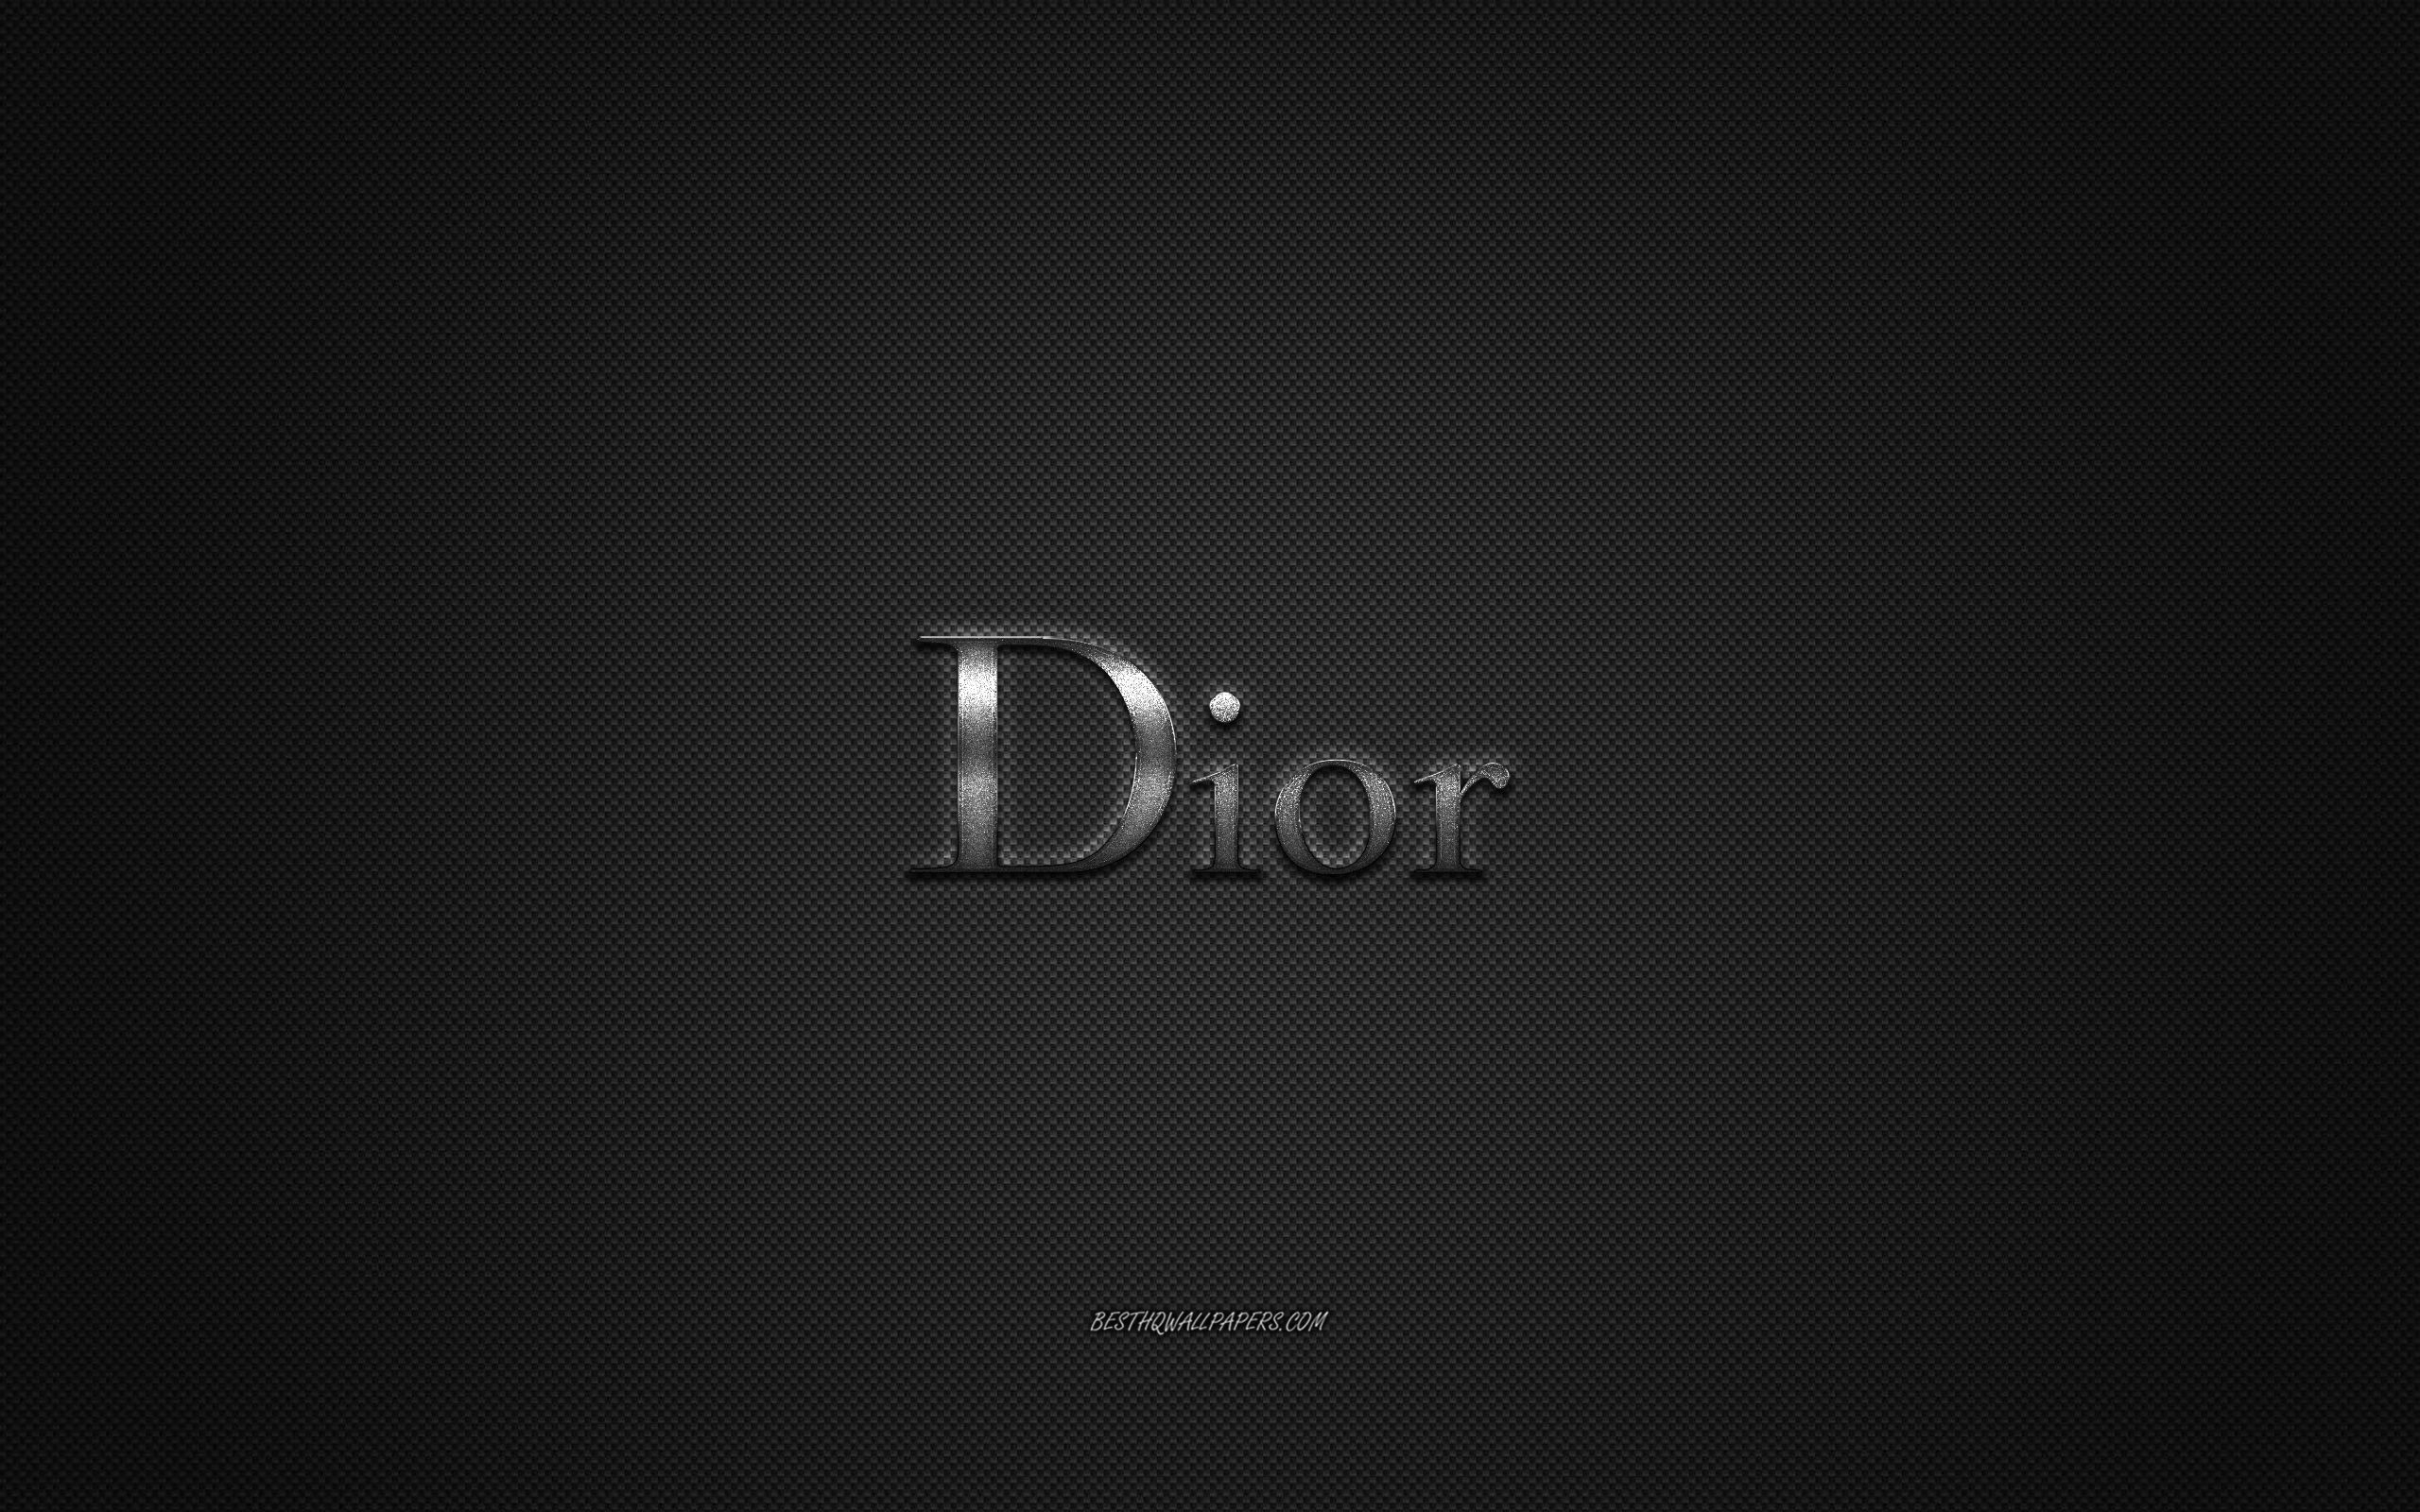 Download wallpapers Dior logo, metal emblem, apparel brand, black.